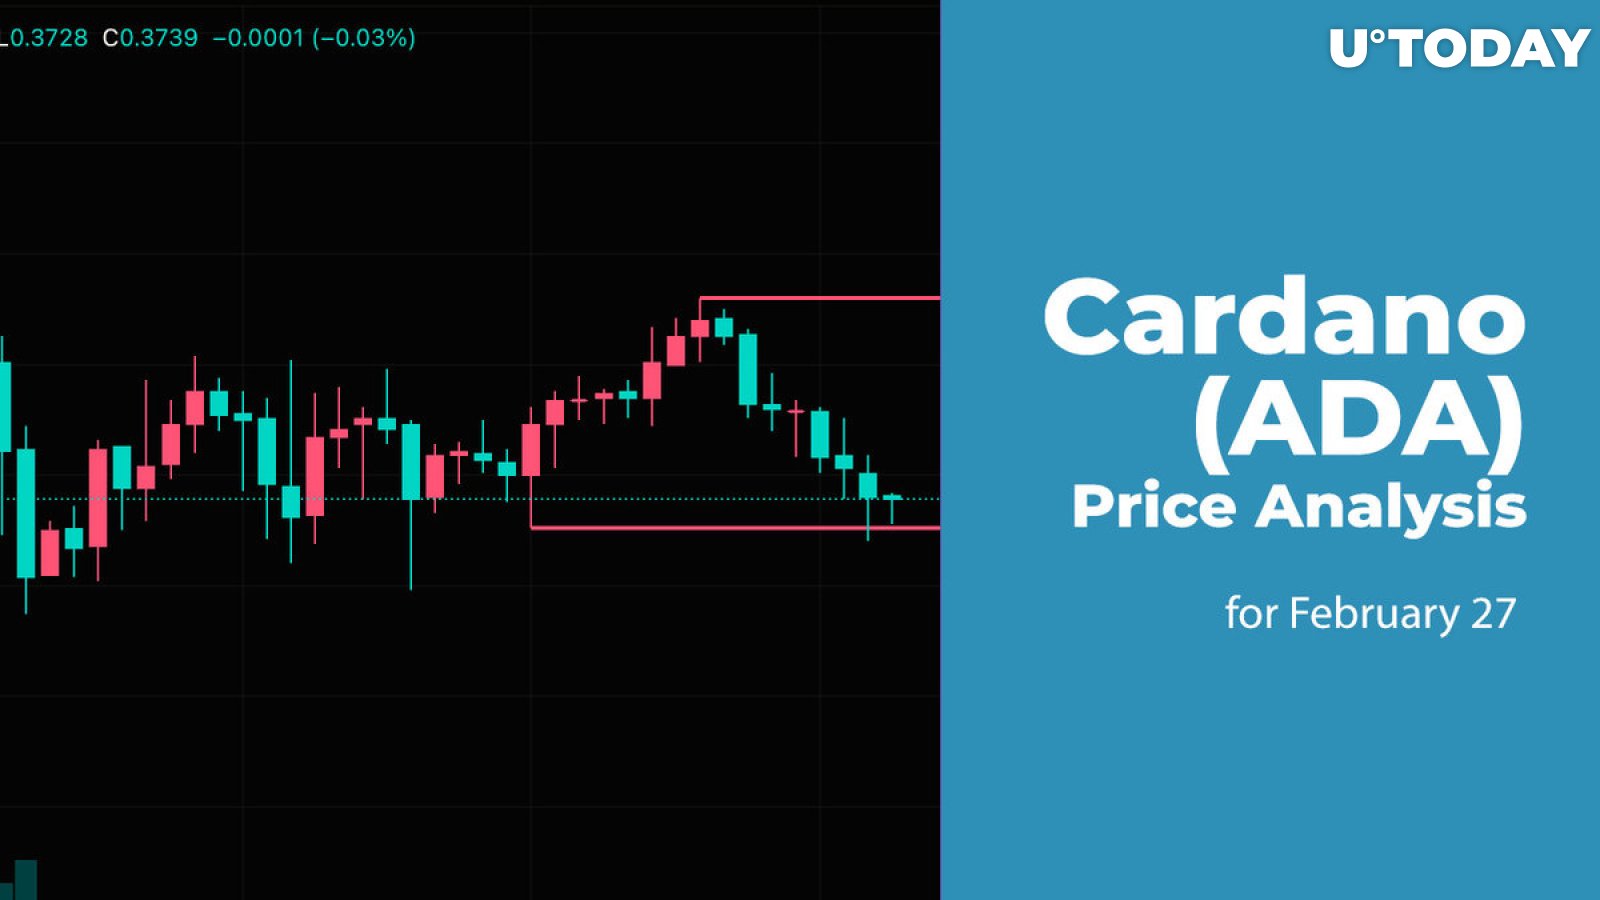 Cardano (ADA) Price Analysis for February 27